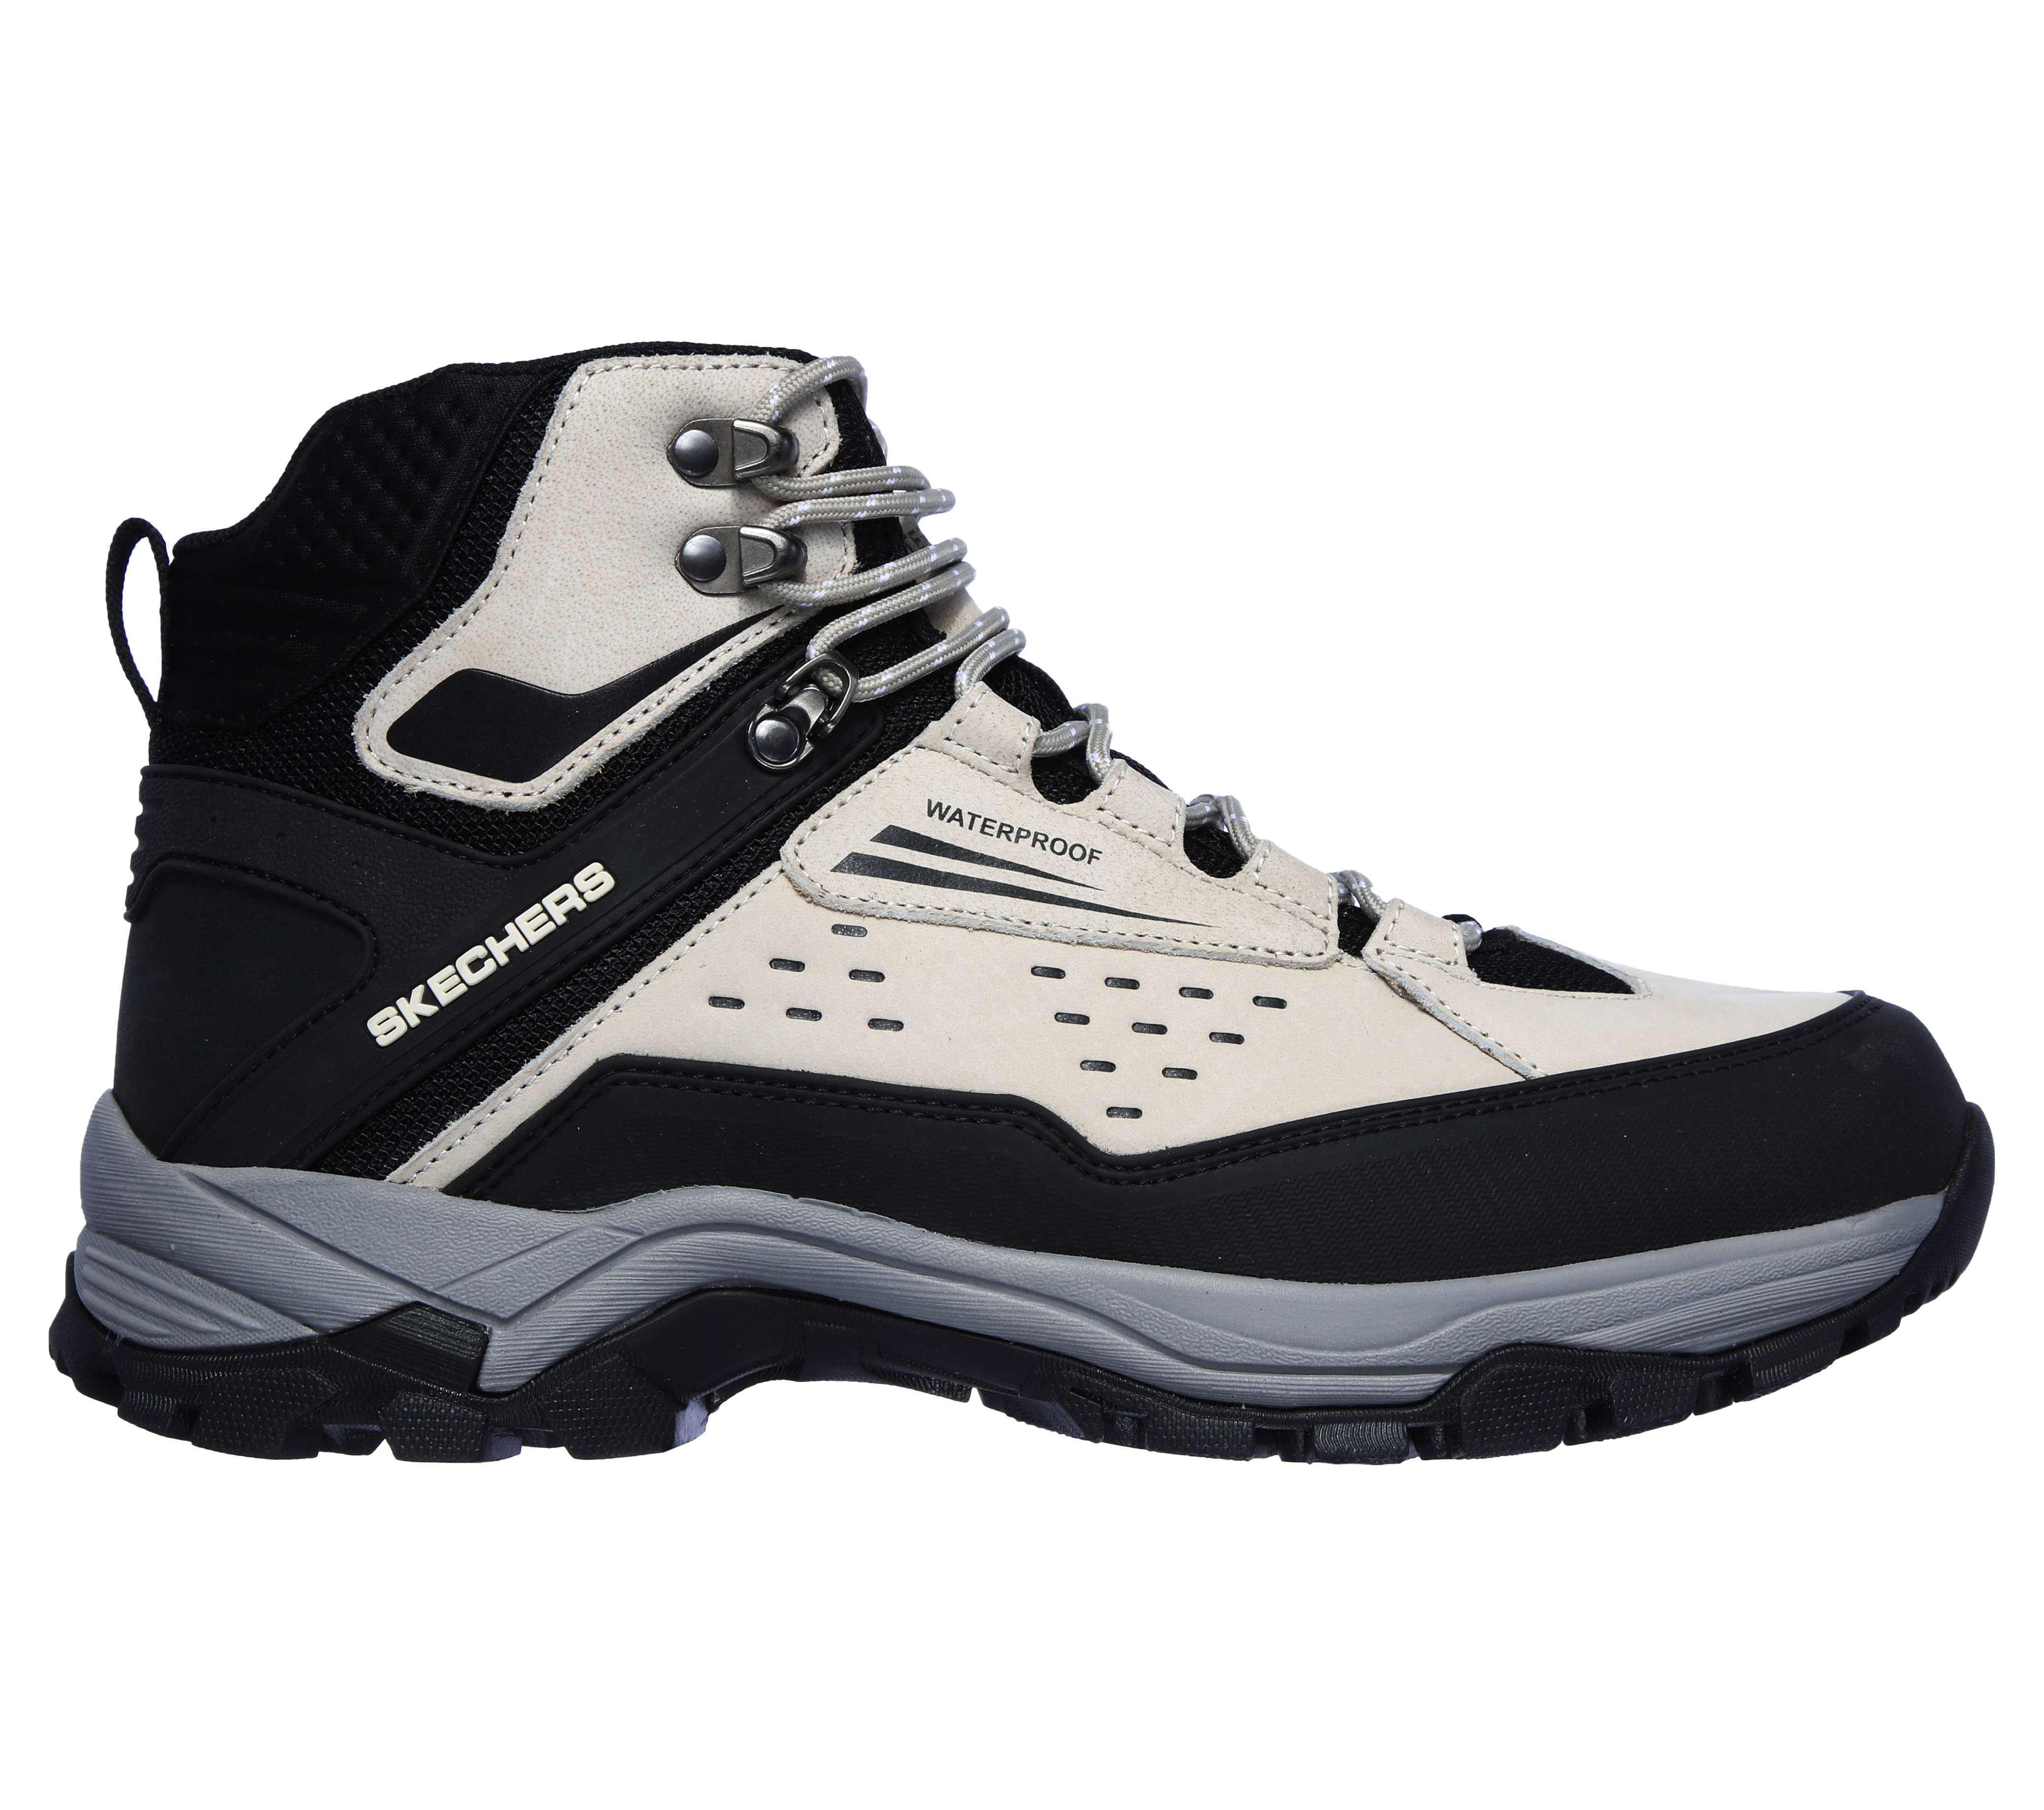 skechers black hiking boots